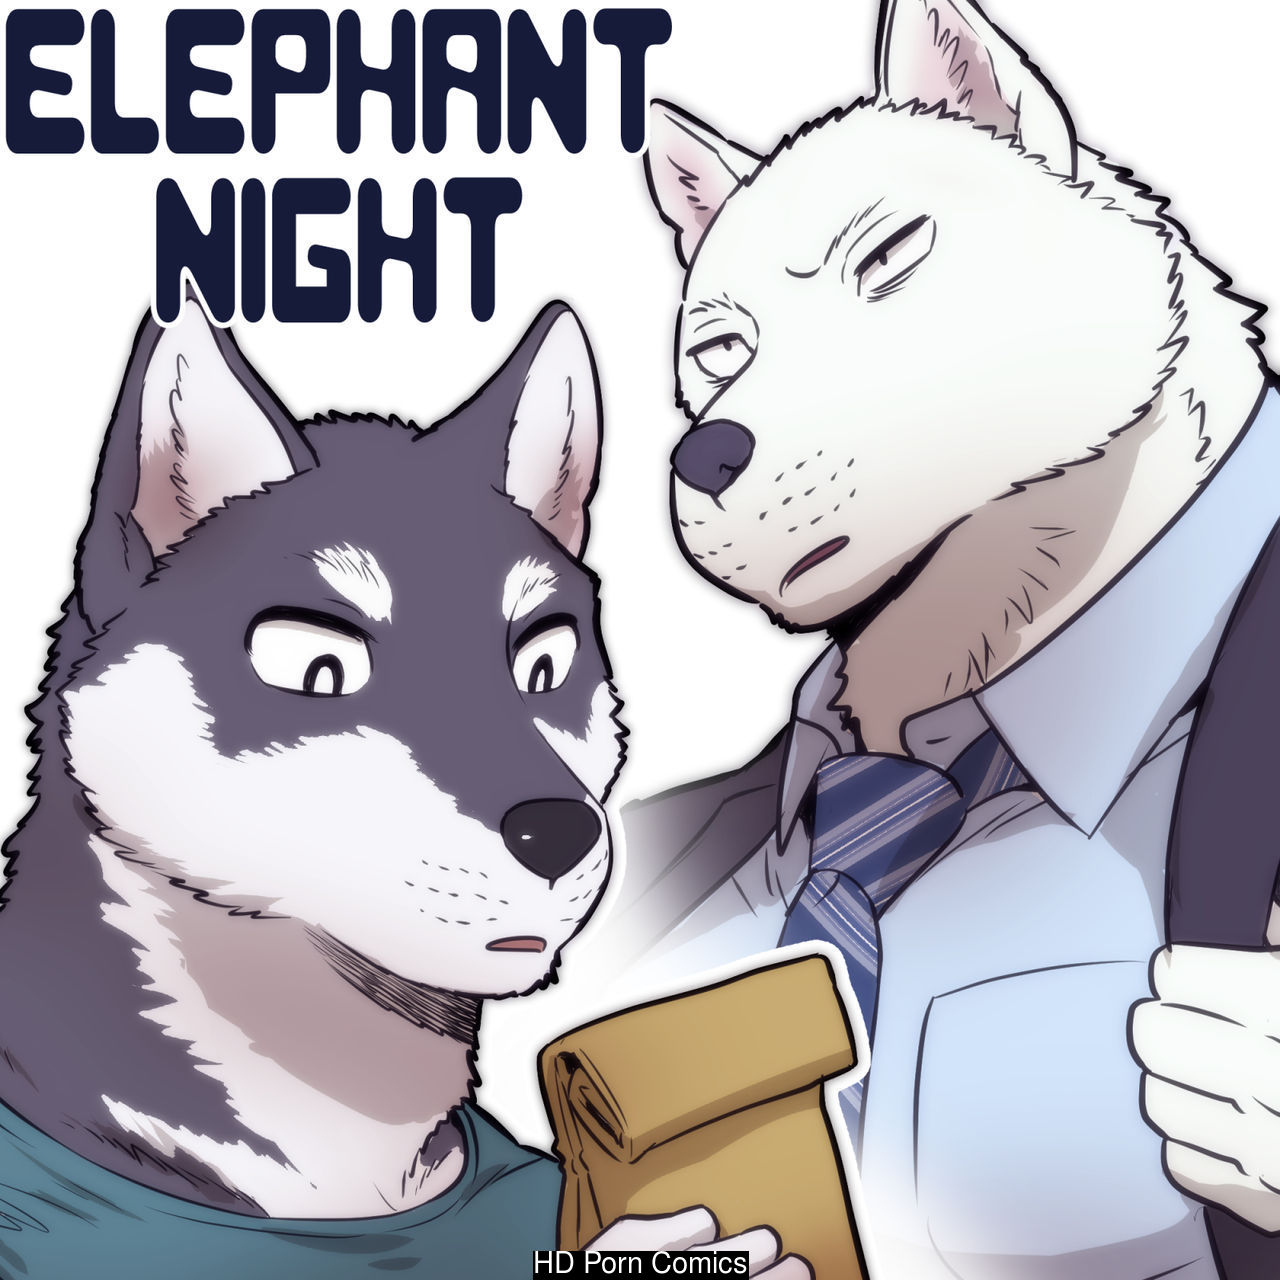 Gay Furry Elephant Porn - Elephant Night comic porn â€“ HD Porn Comics